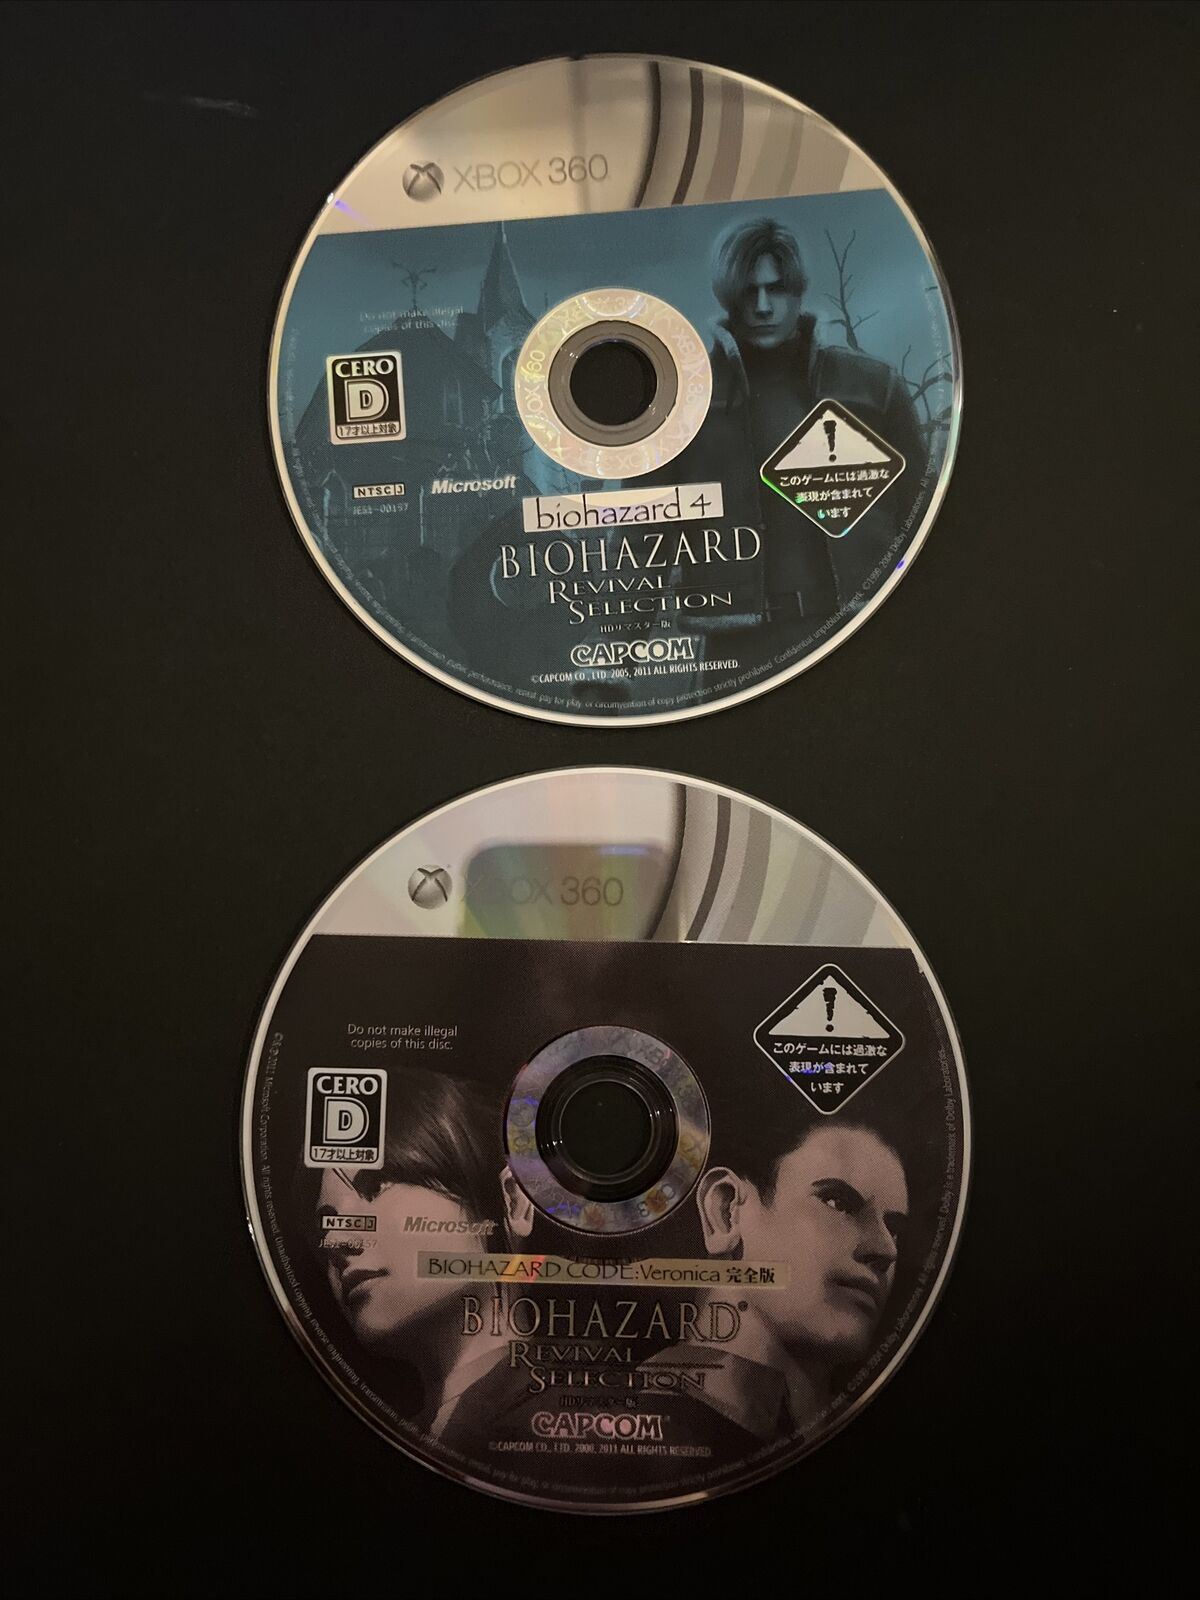 Biohazard: Revival Selection - Microsoft XBOX 360 NTSC-J JAPAN Game with Manual